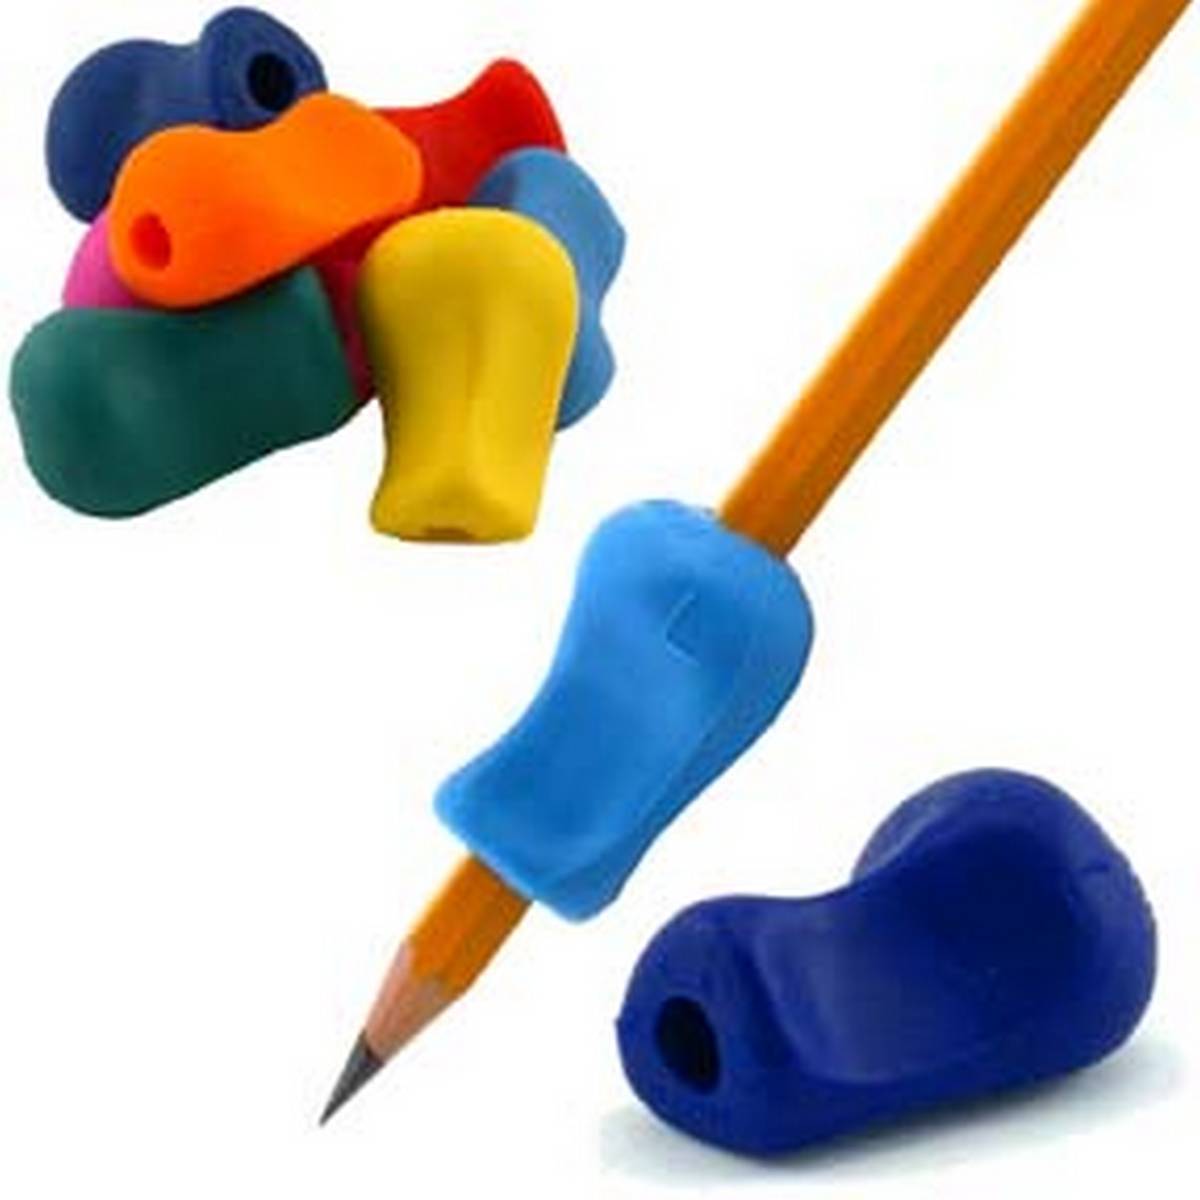 The Pencil Grip - Single Grip